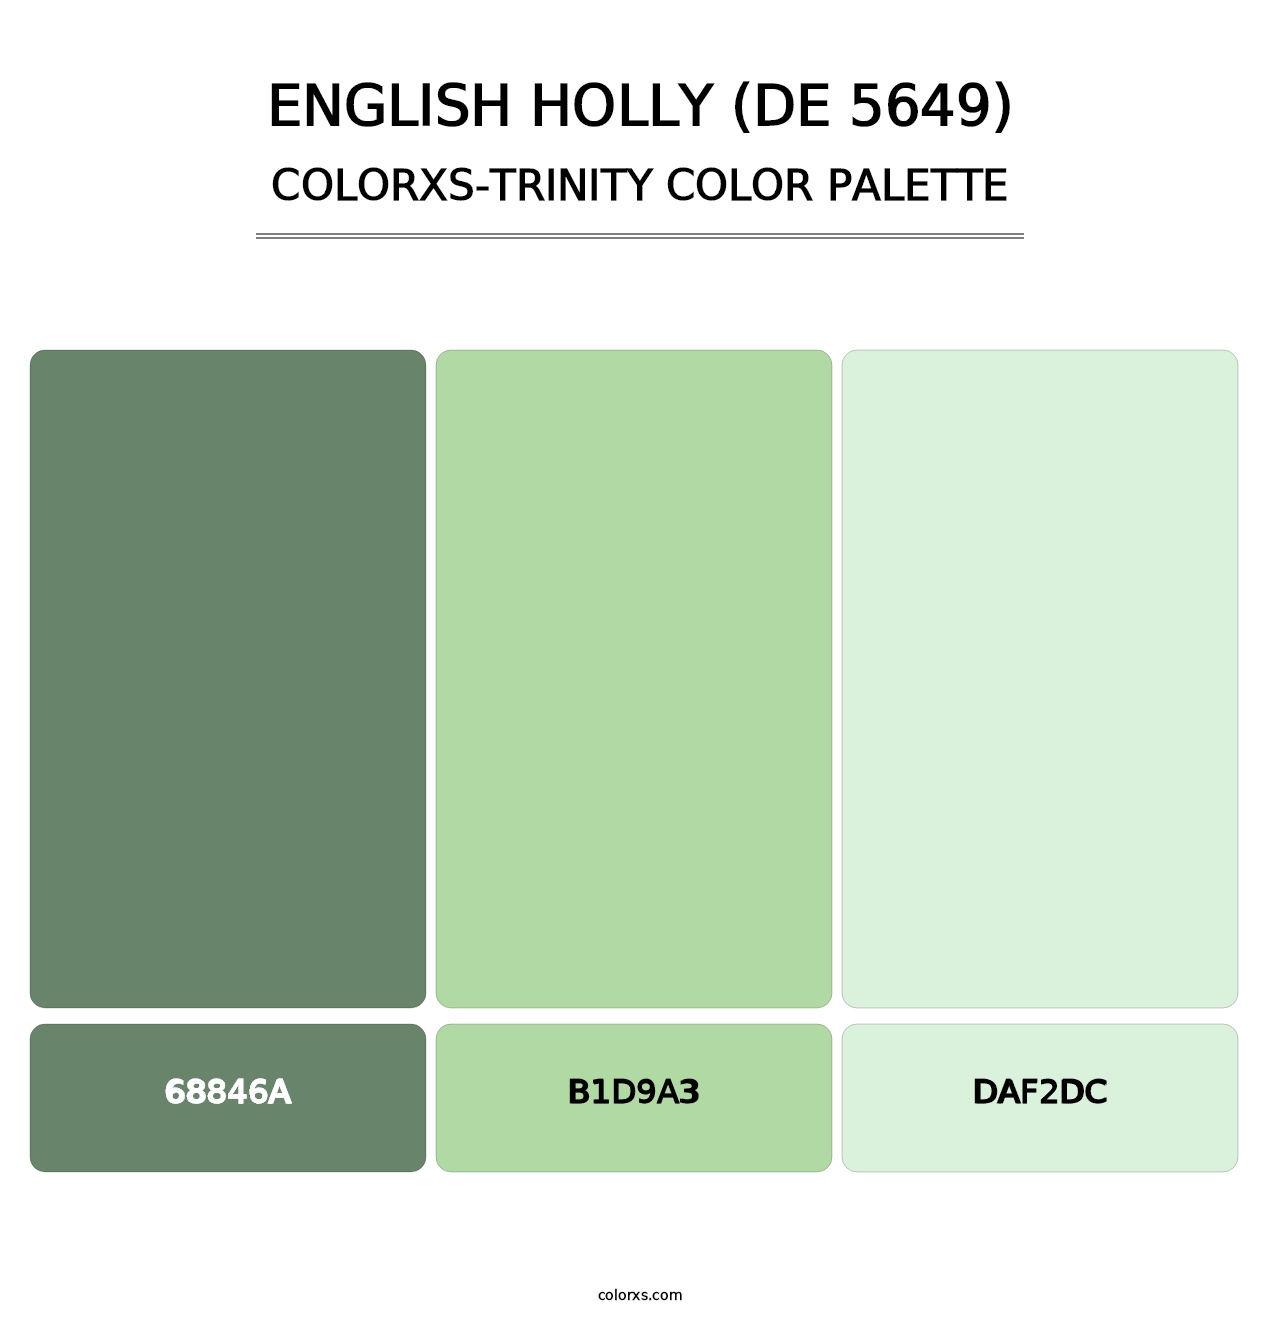 English Holly (DE 5649) - Colorxs Trinity Palette